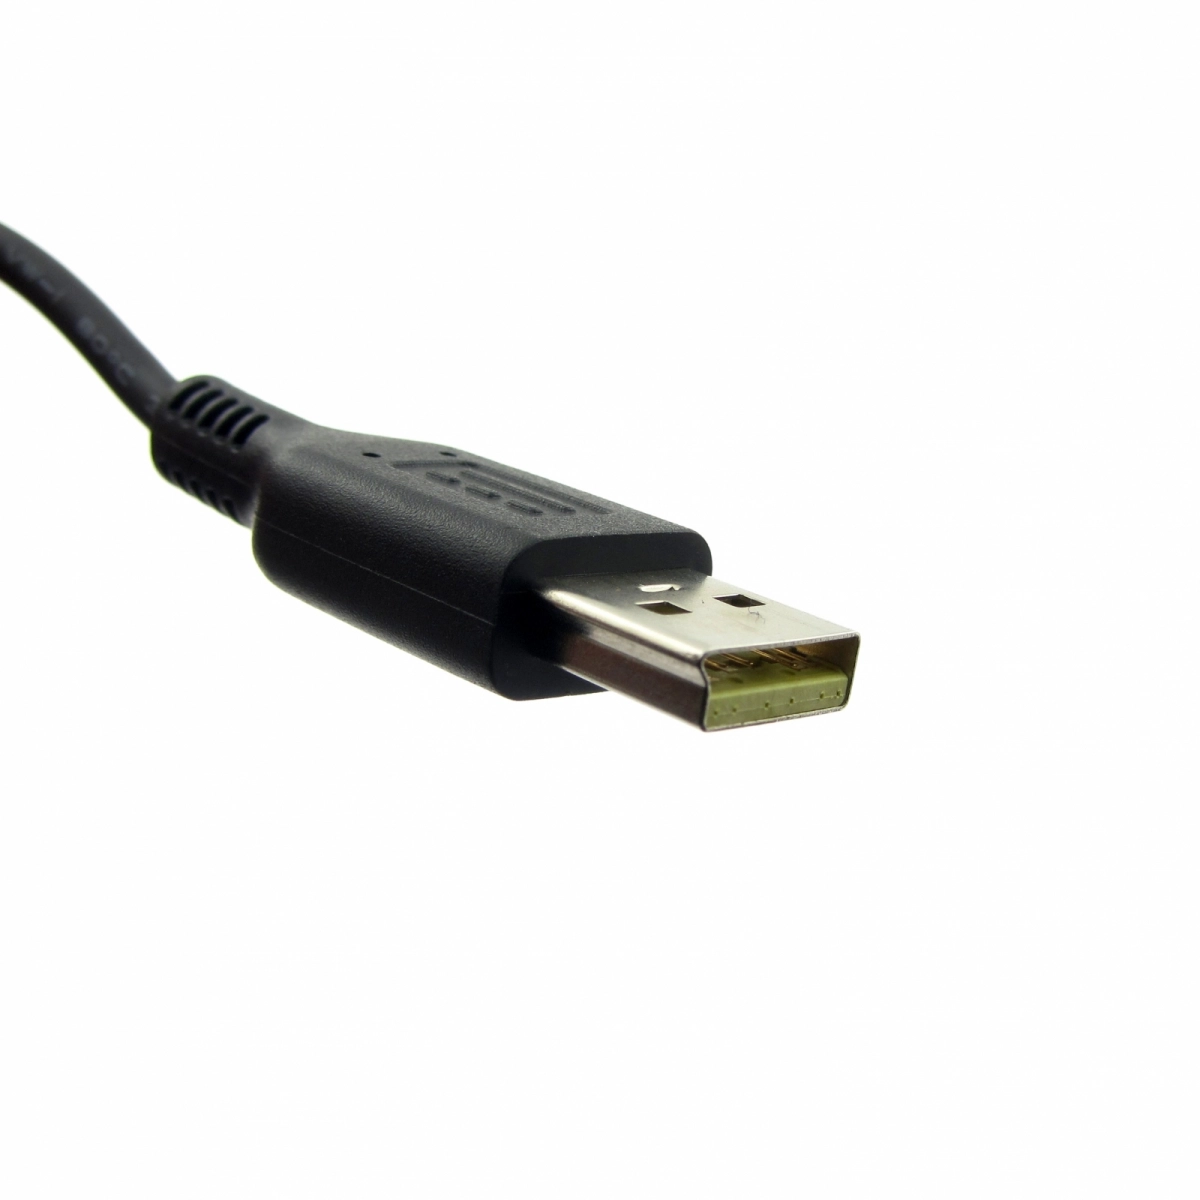 MTXtec Netzteil für LENOVO 36200562, 20/5.2V, 2A, Stecker USB